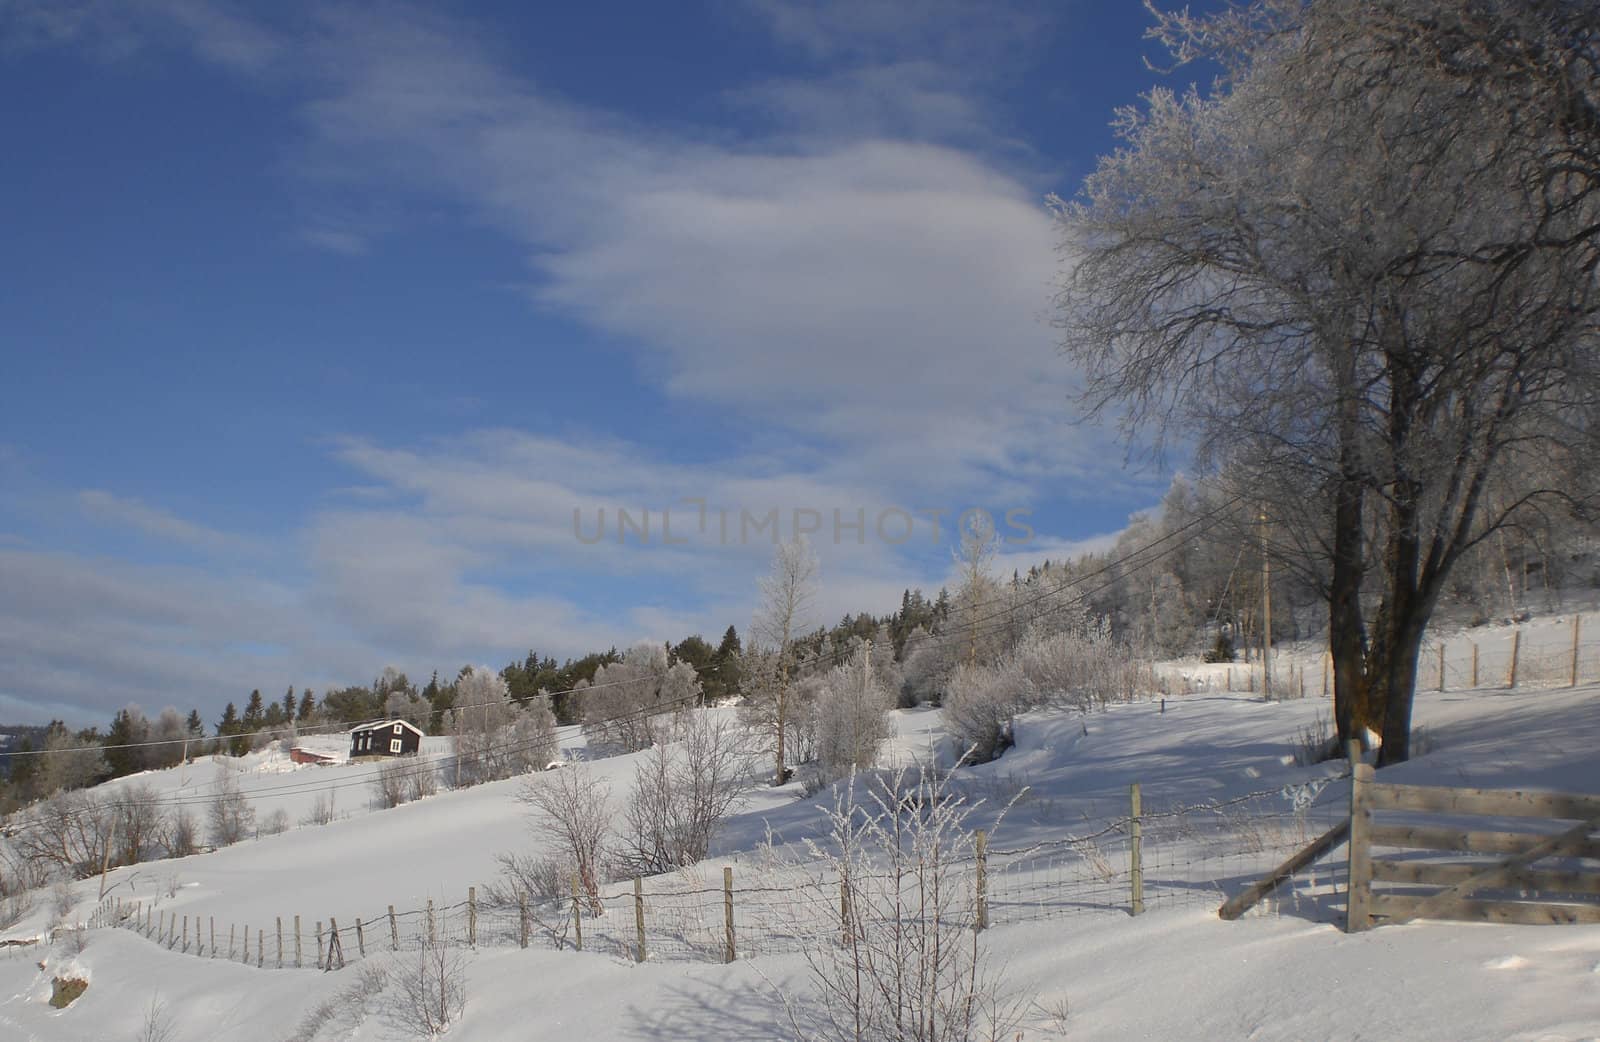 A norwegian snow landskape